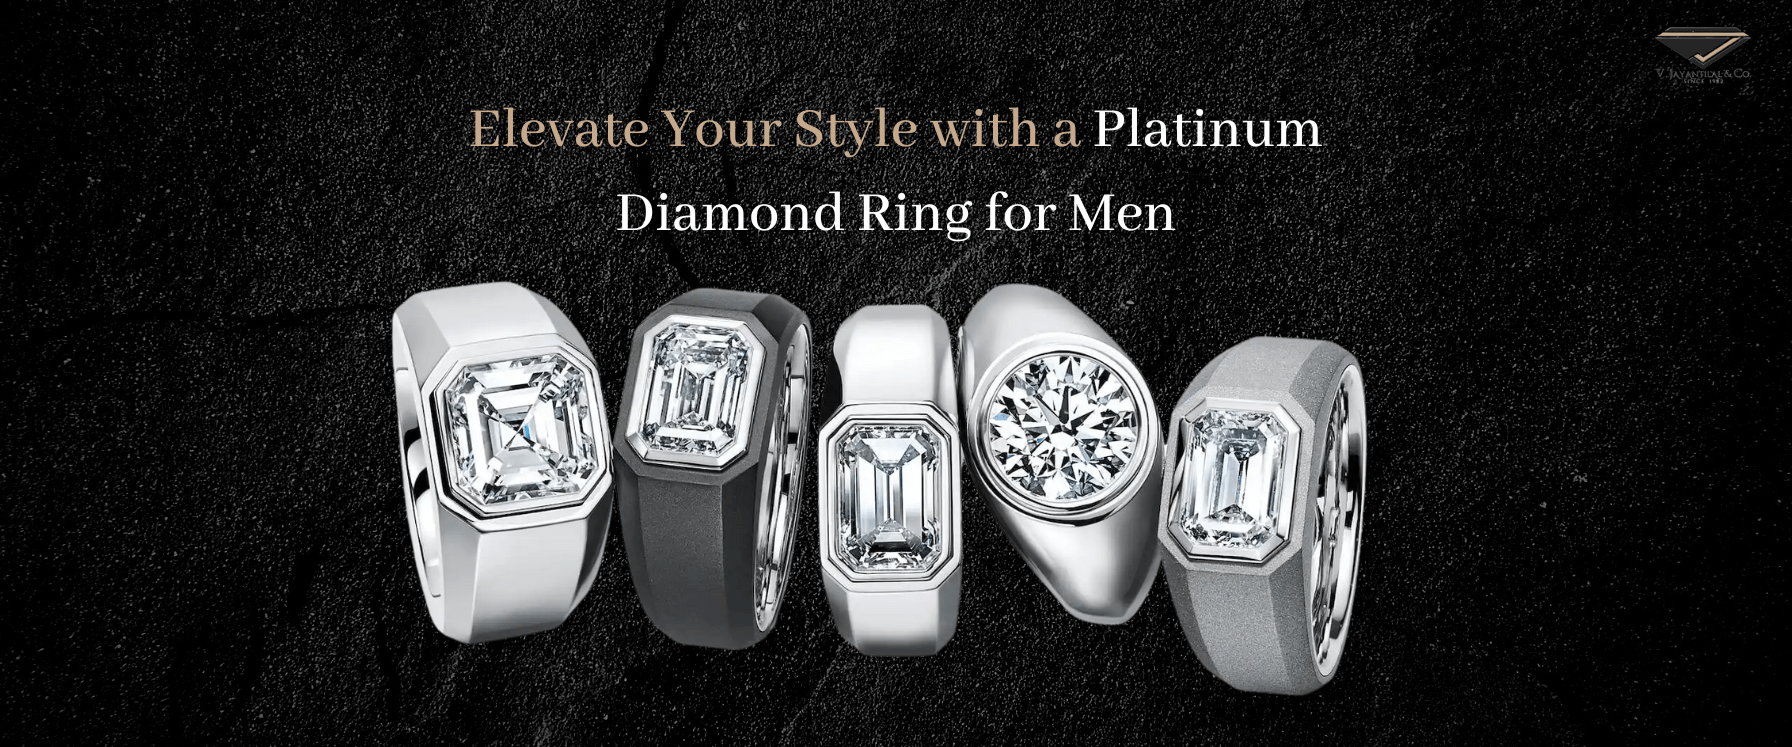 Platinum Men's Diamond & Sapphire Ring - 1800 Loose Diamonds